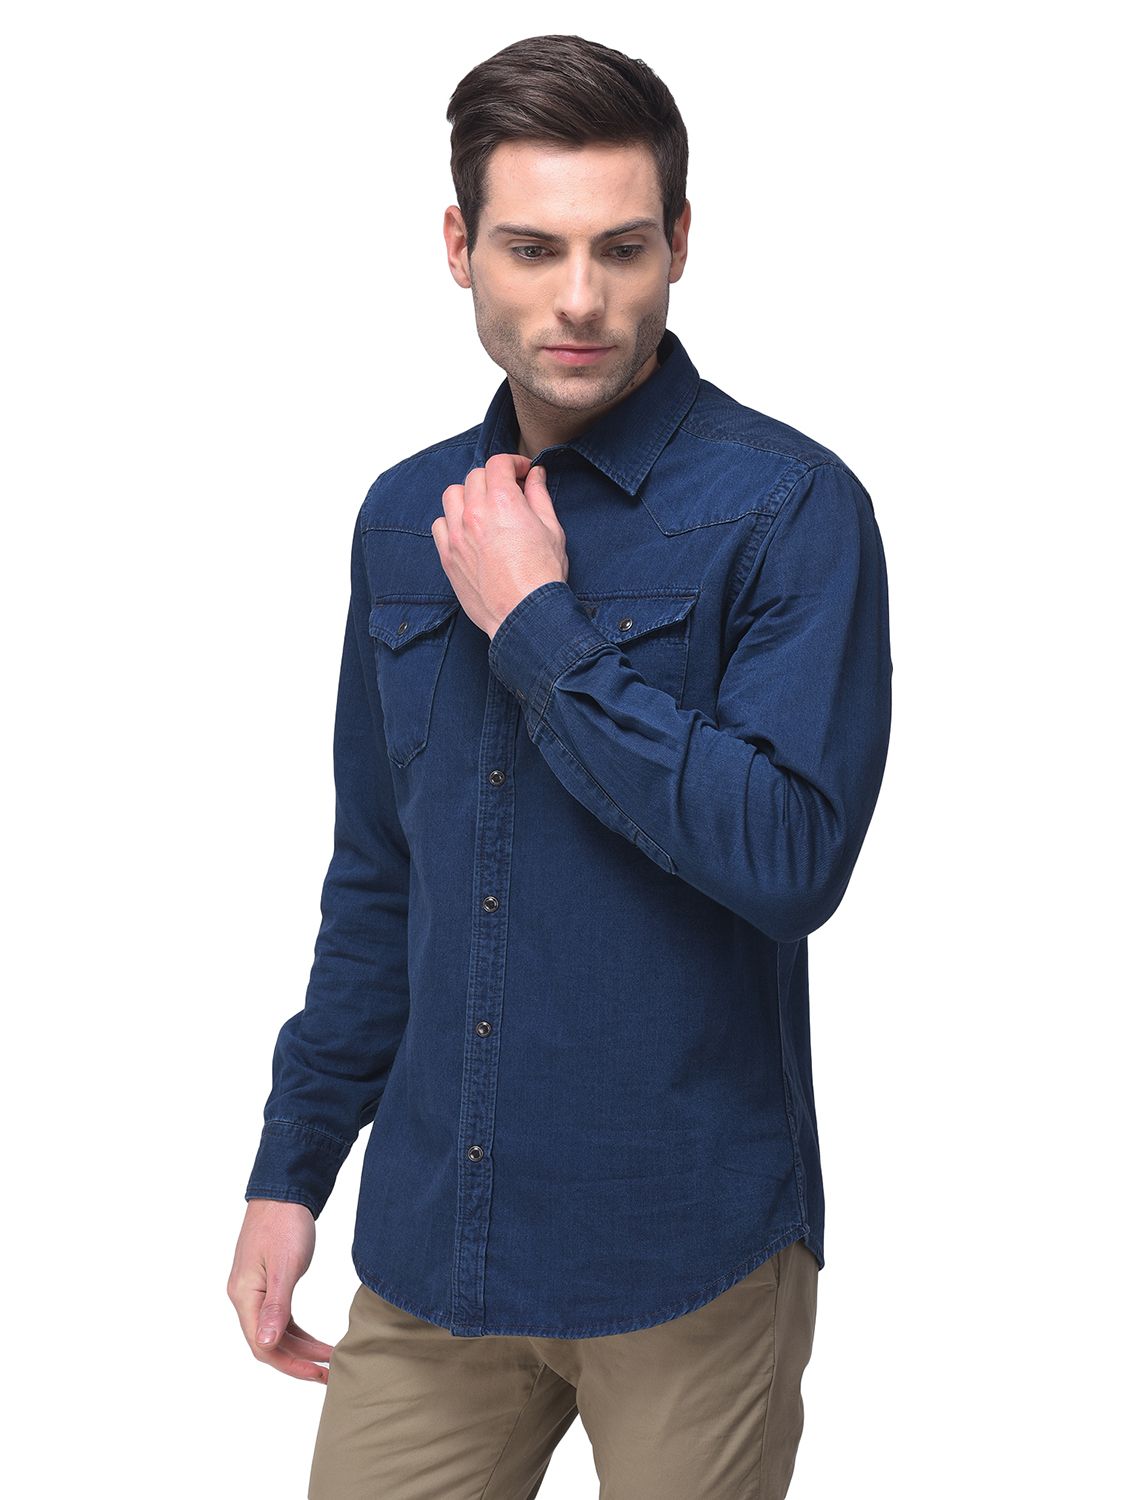 Carbon blue full sleeves shirt